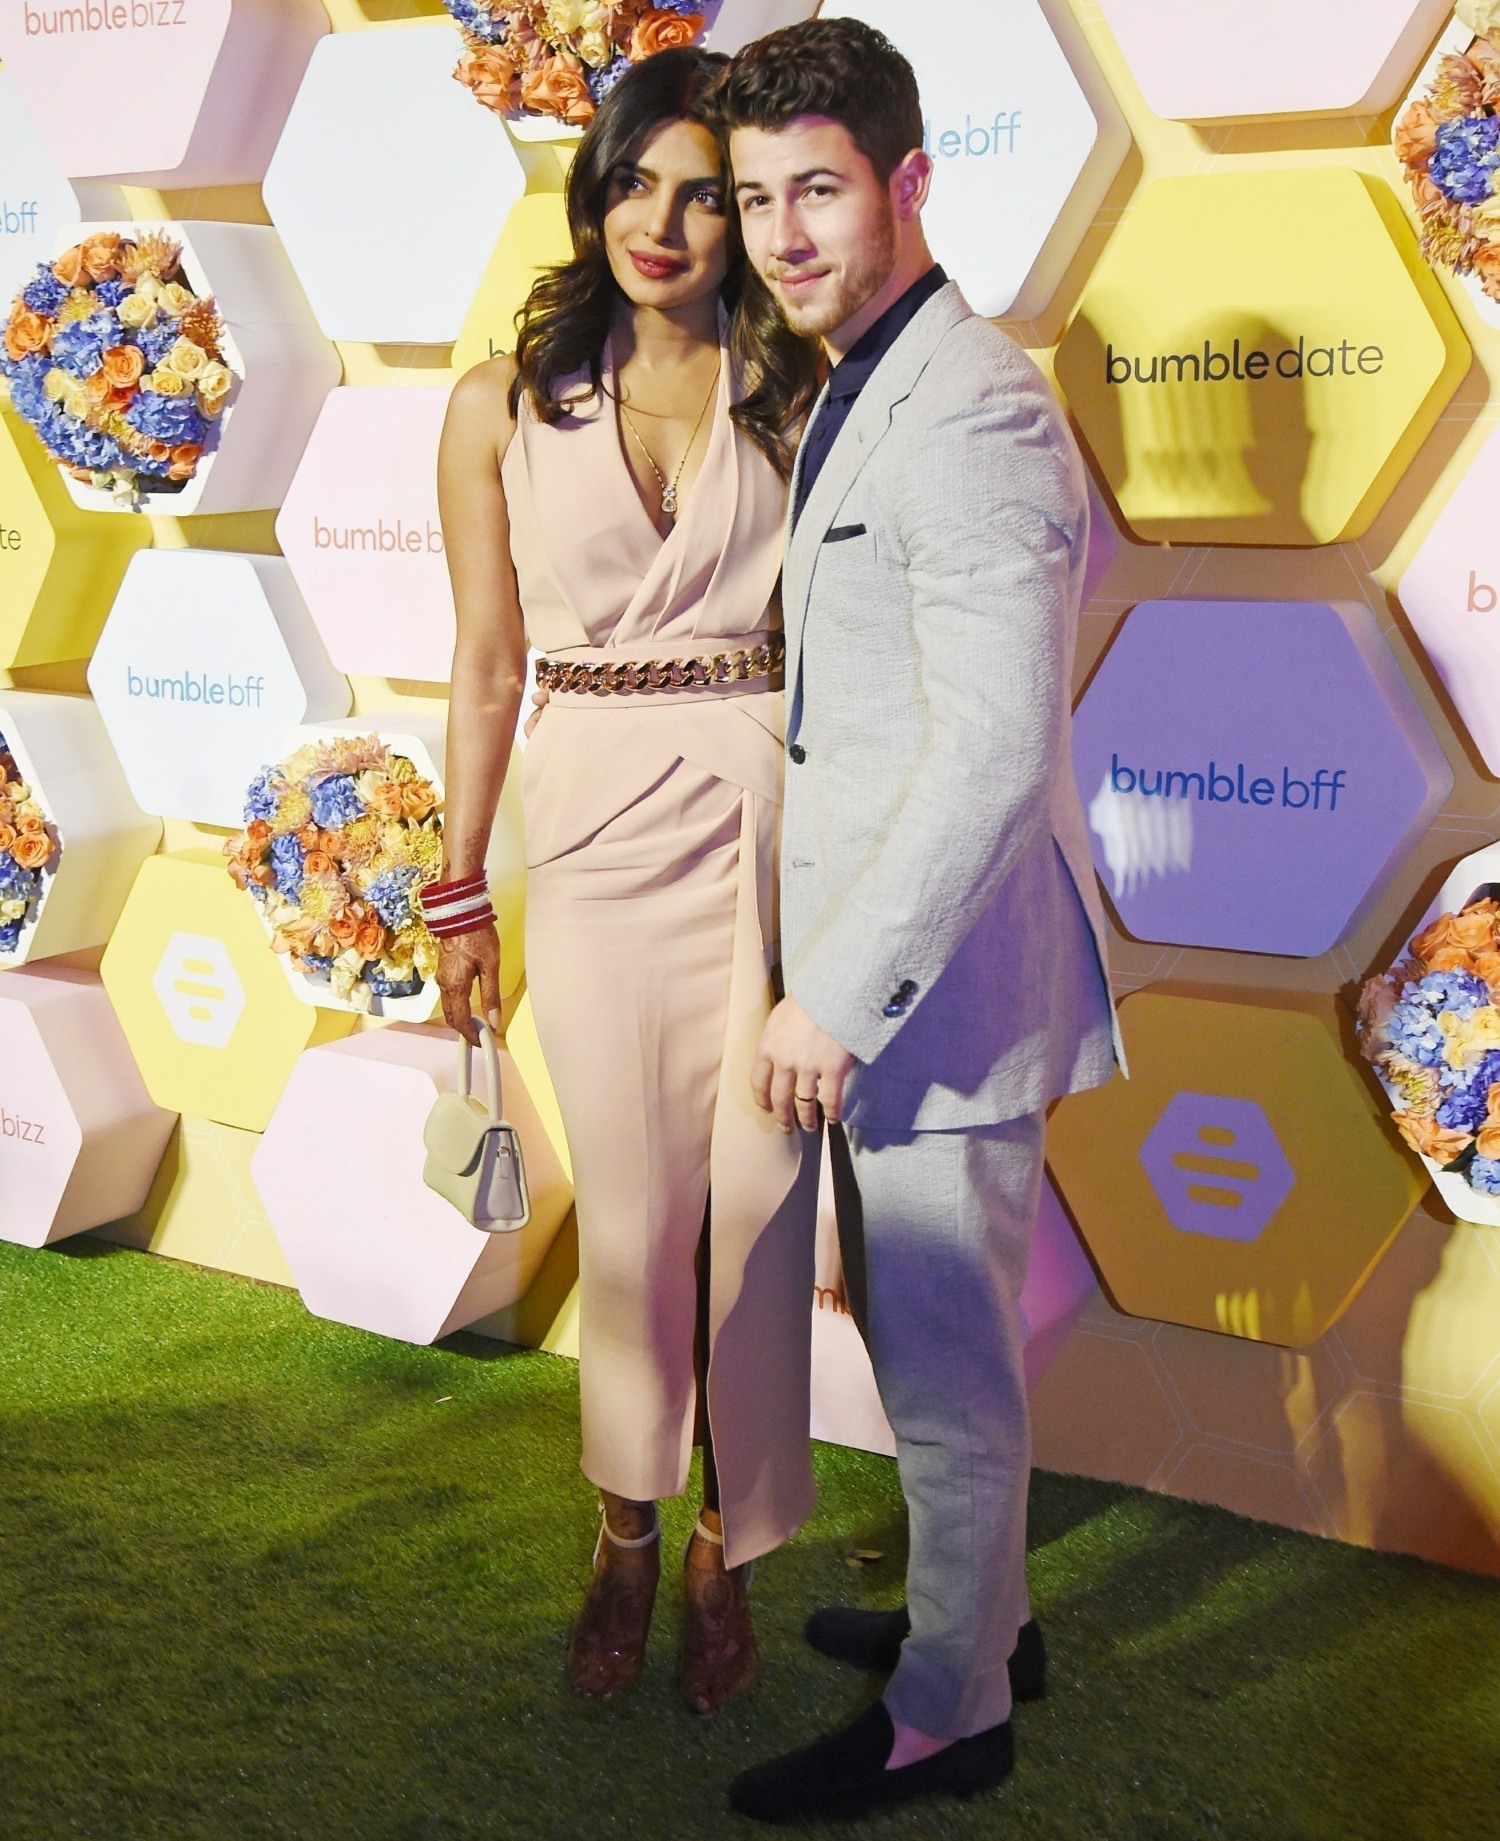 Newlyweds Priyanka Chopra and Nick Jonas at Bumble launch party